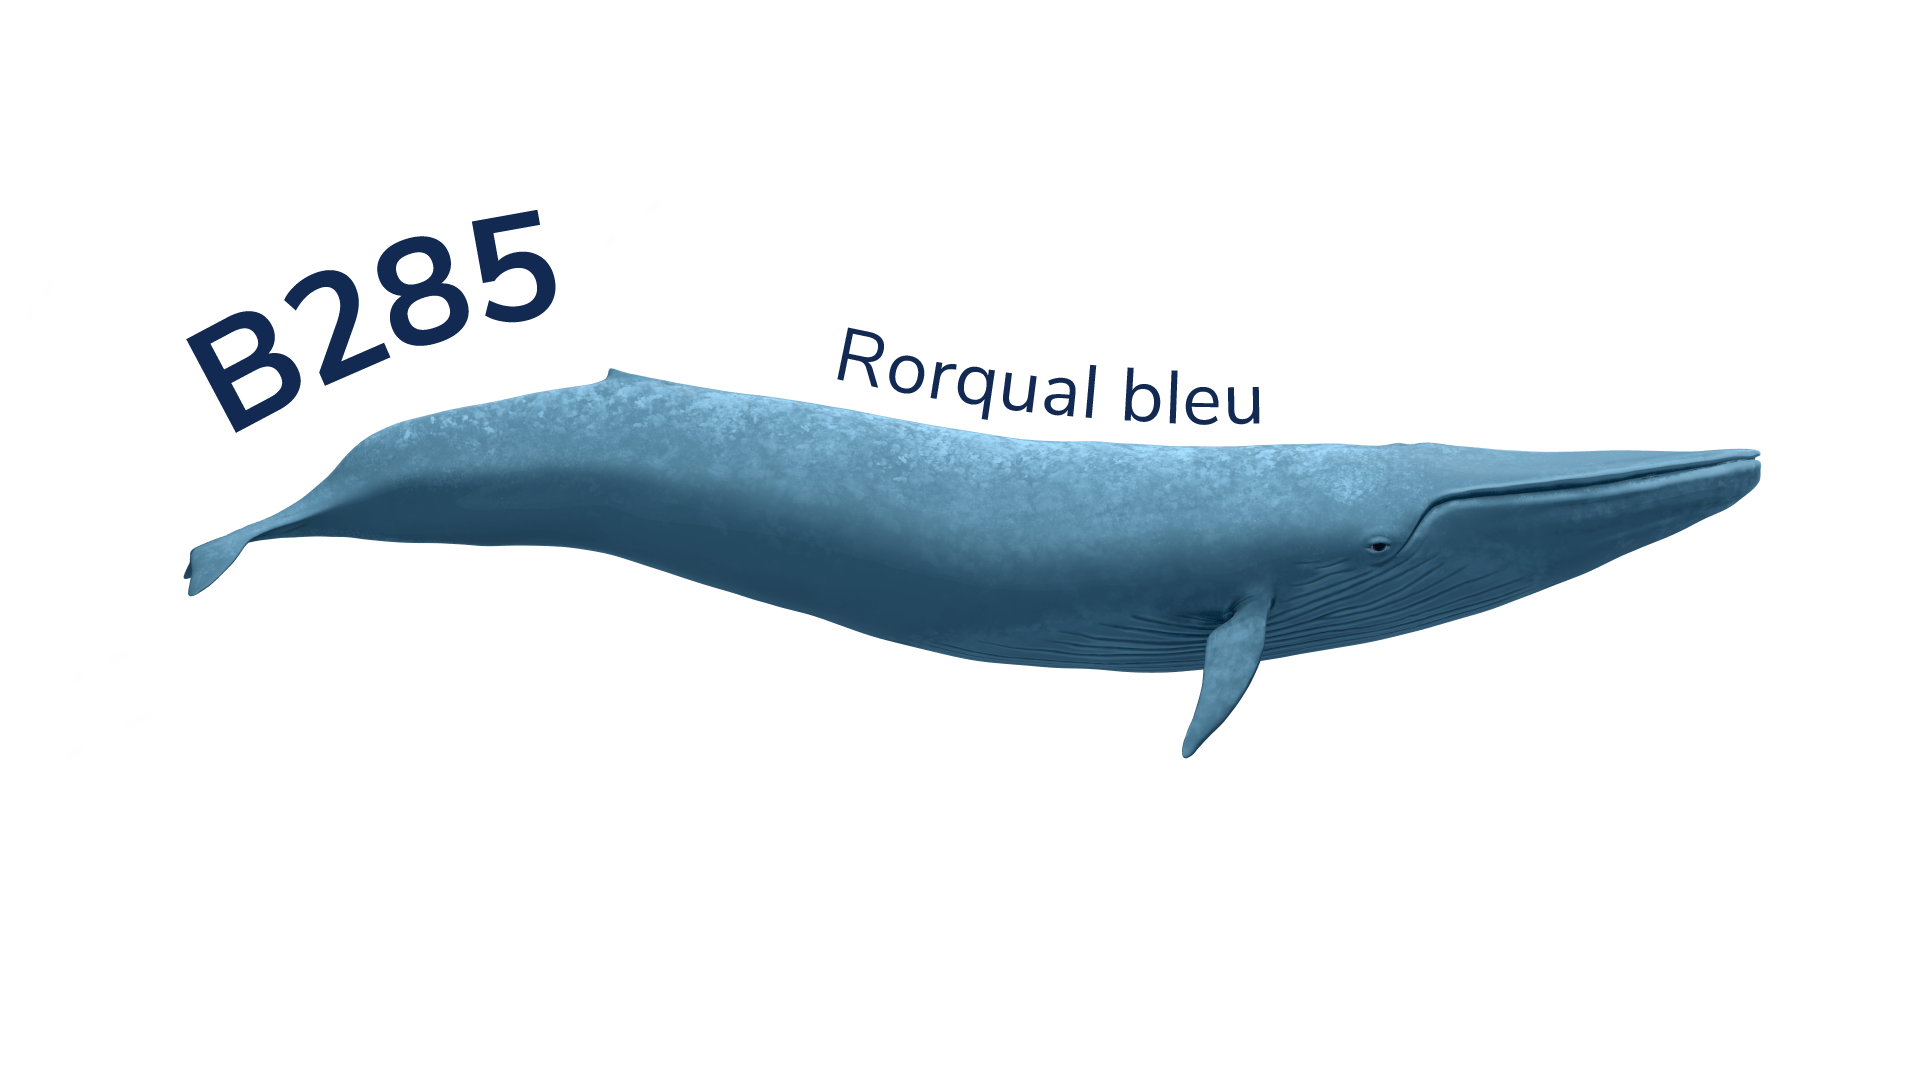 B285 le rorqual bleu